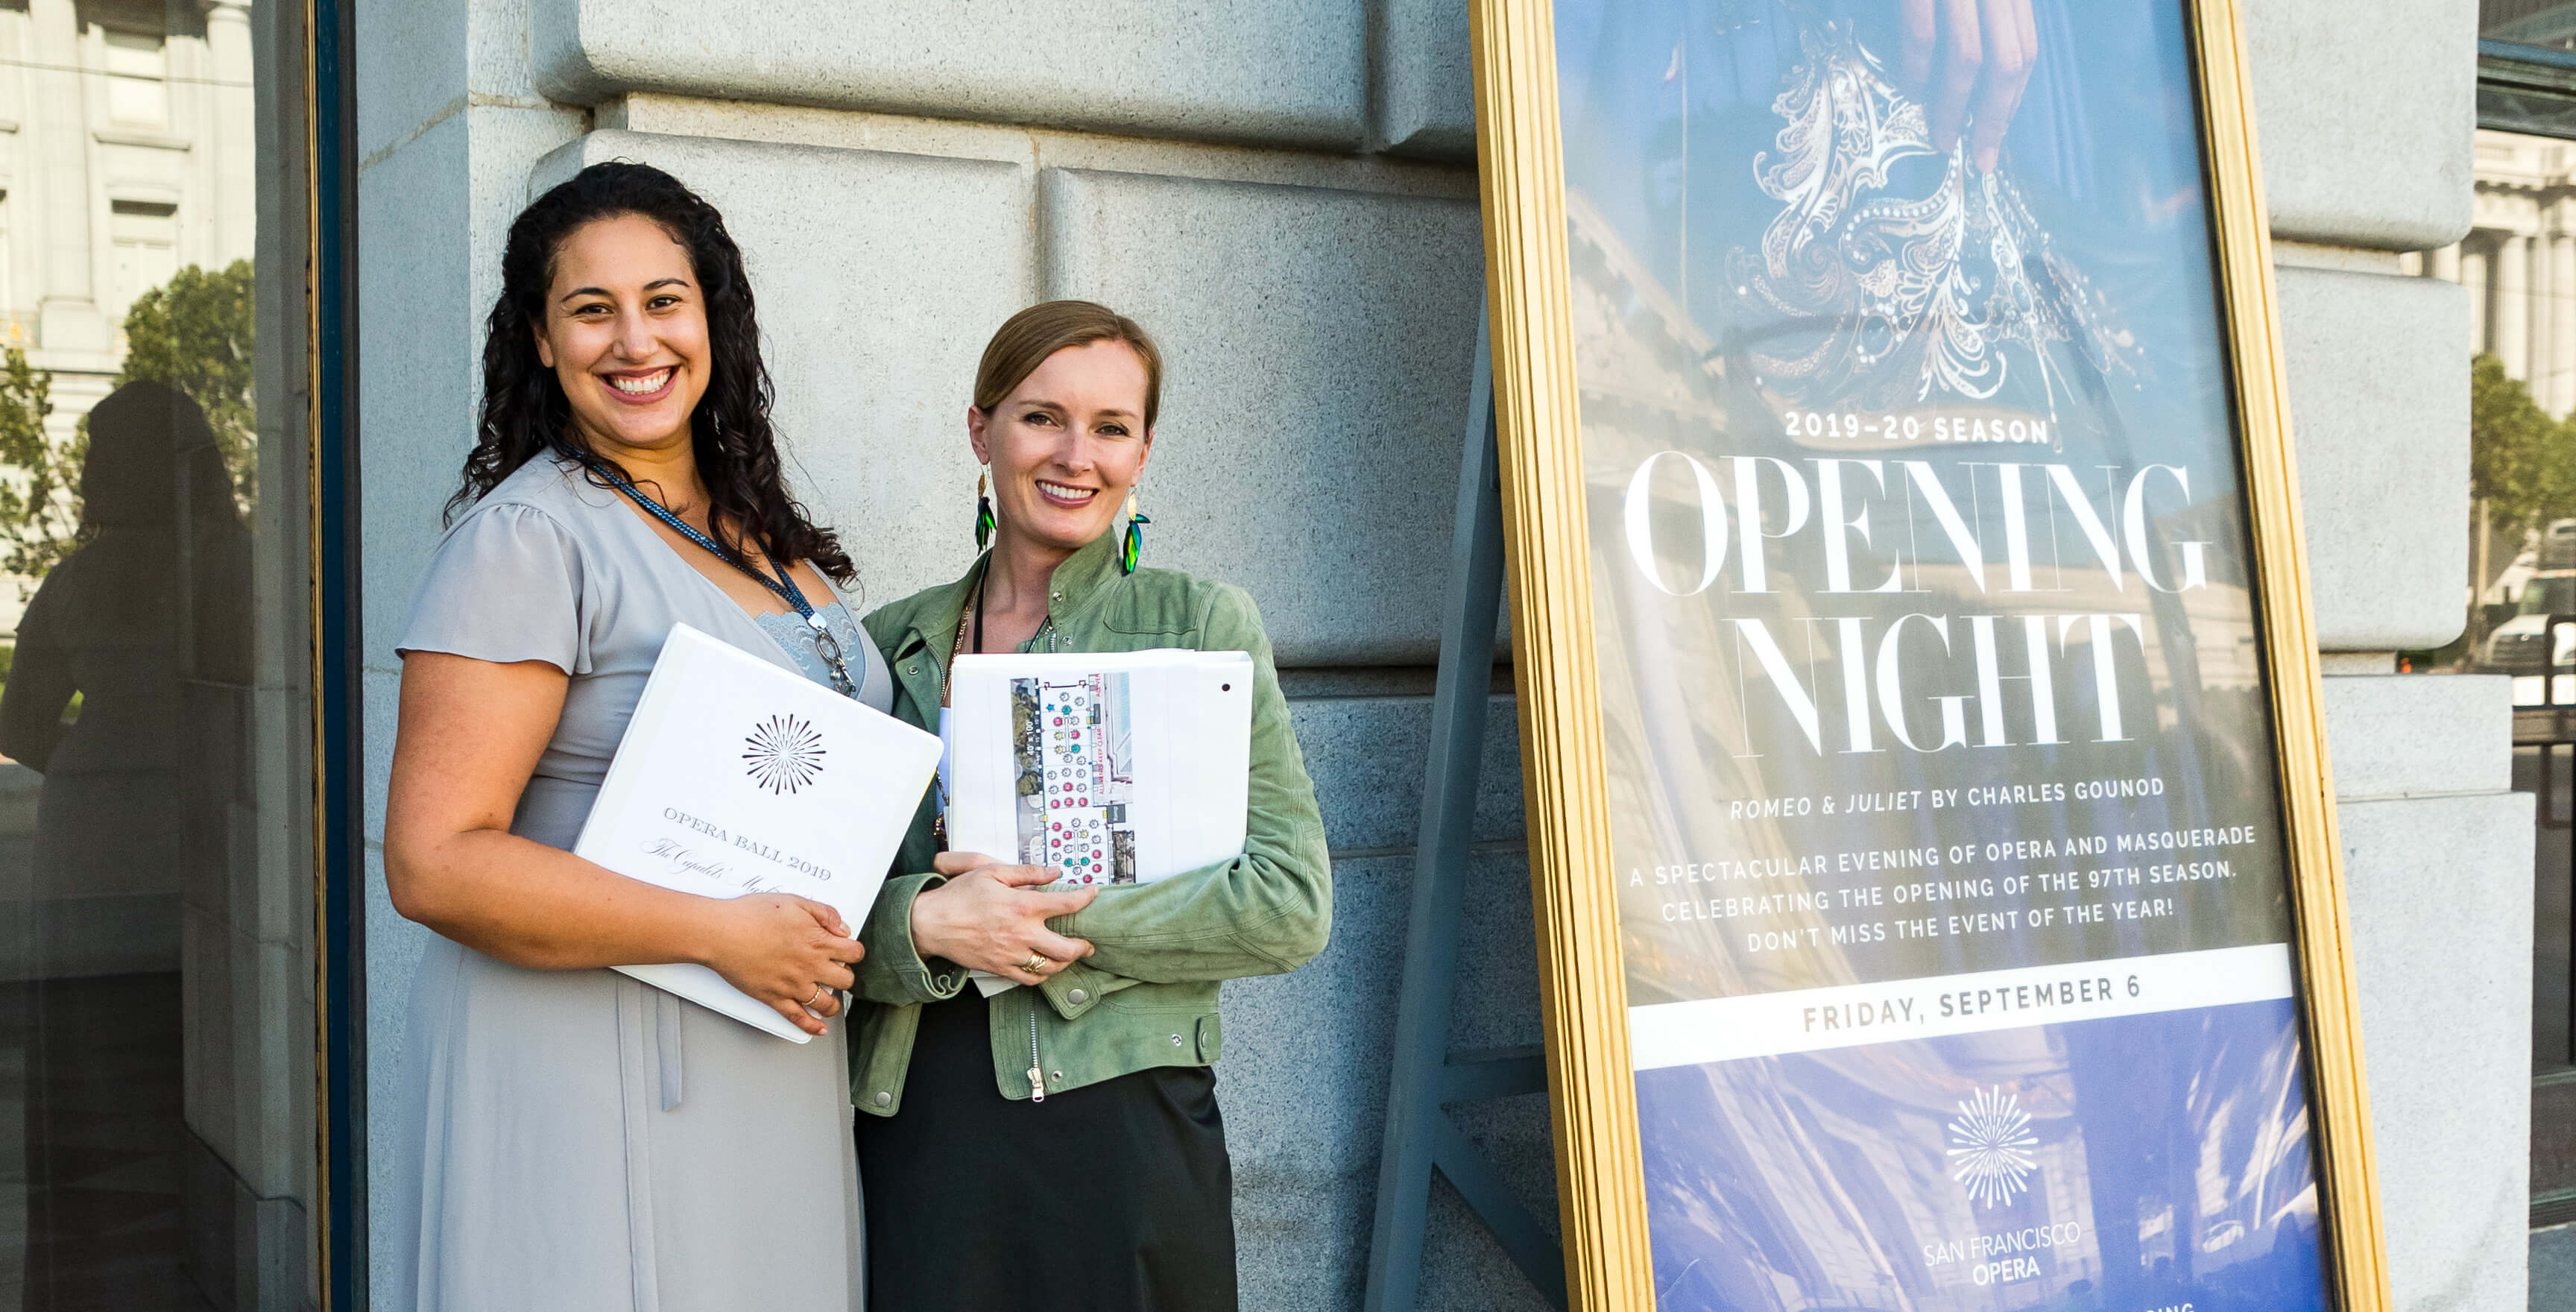 Opera volunteers next to Opening Night sign